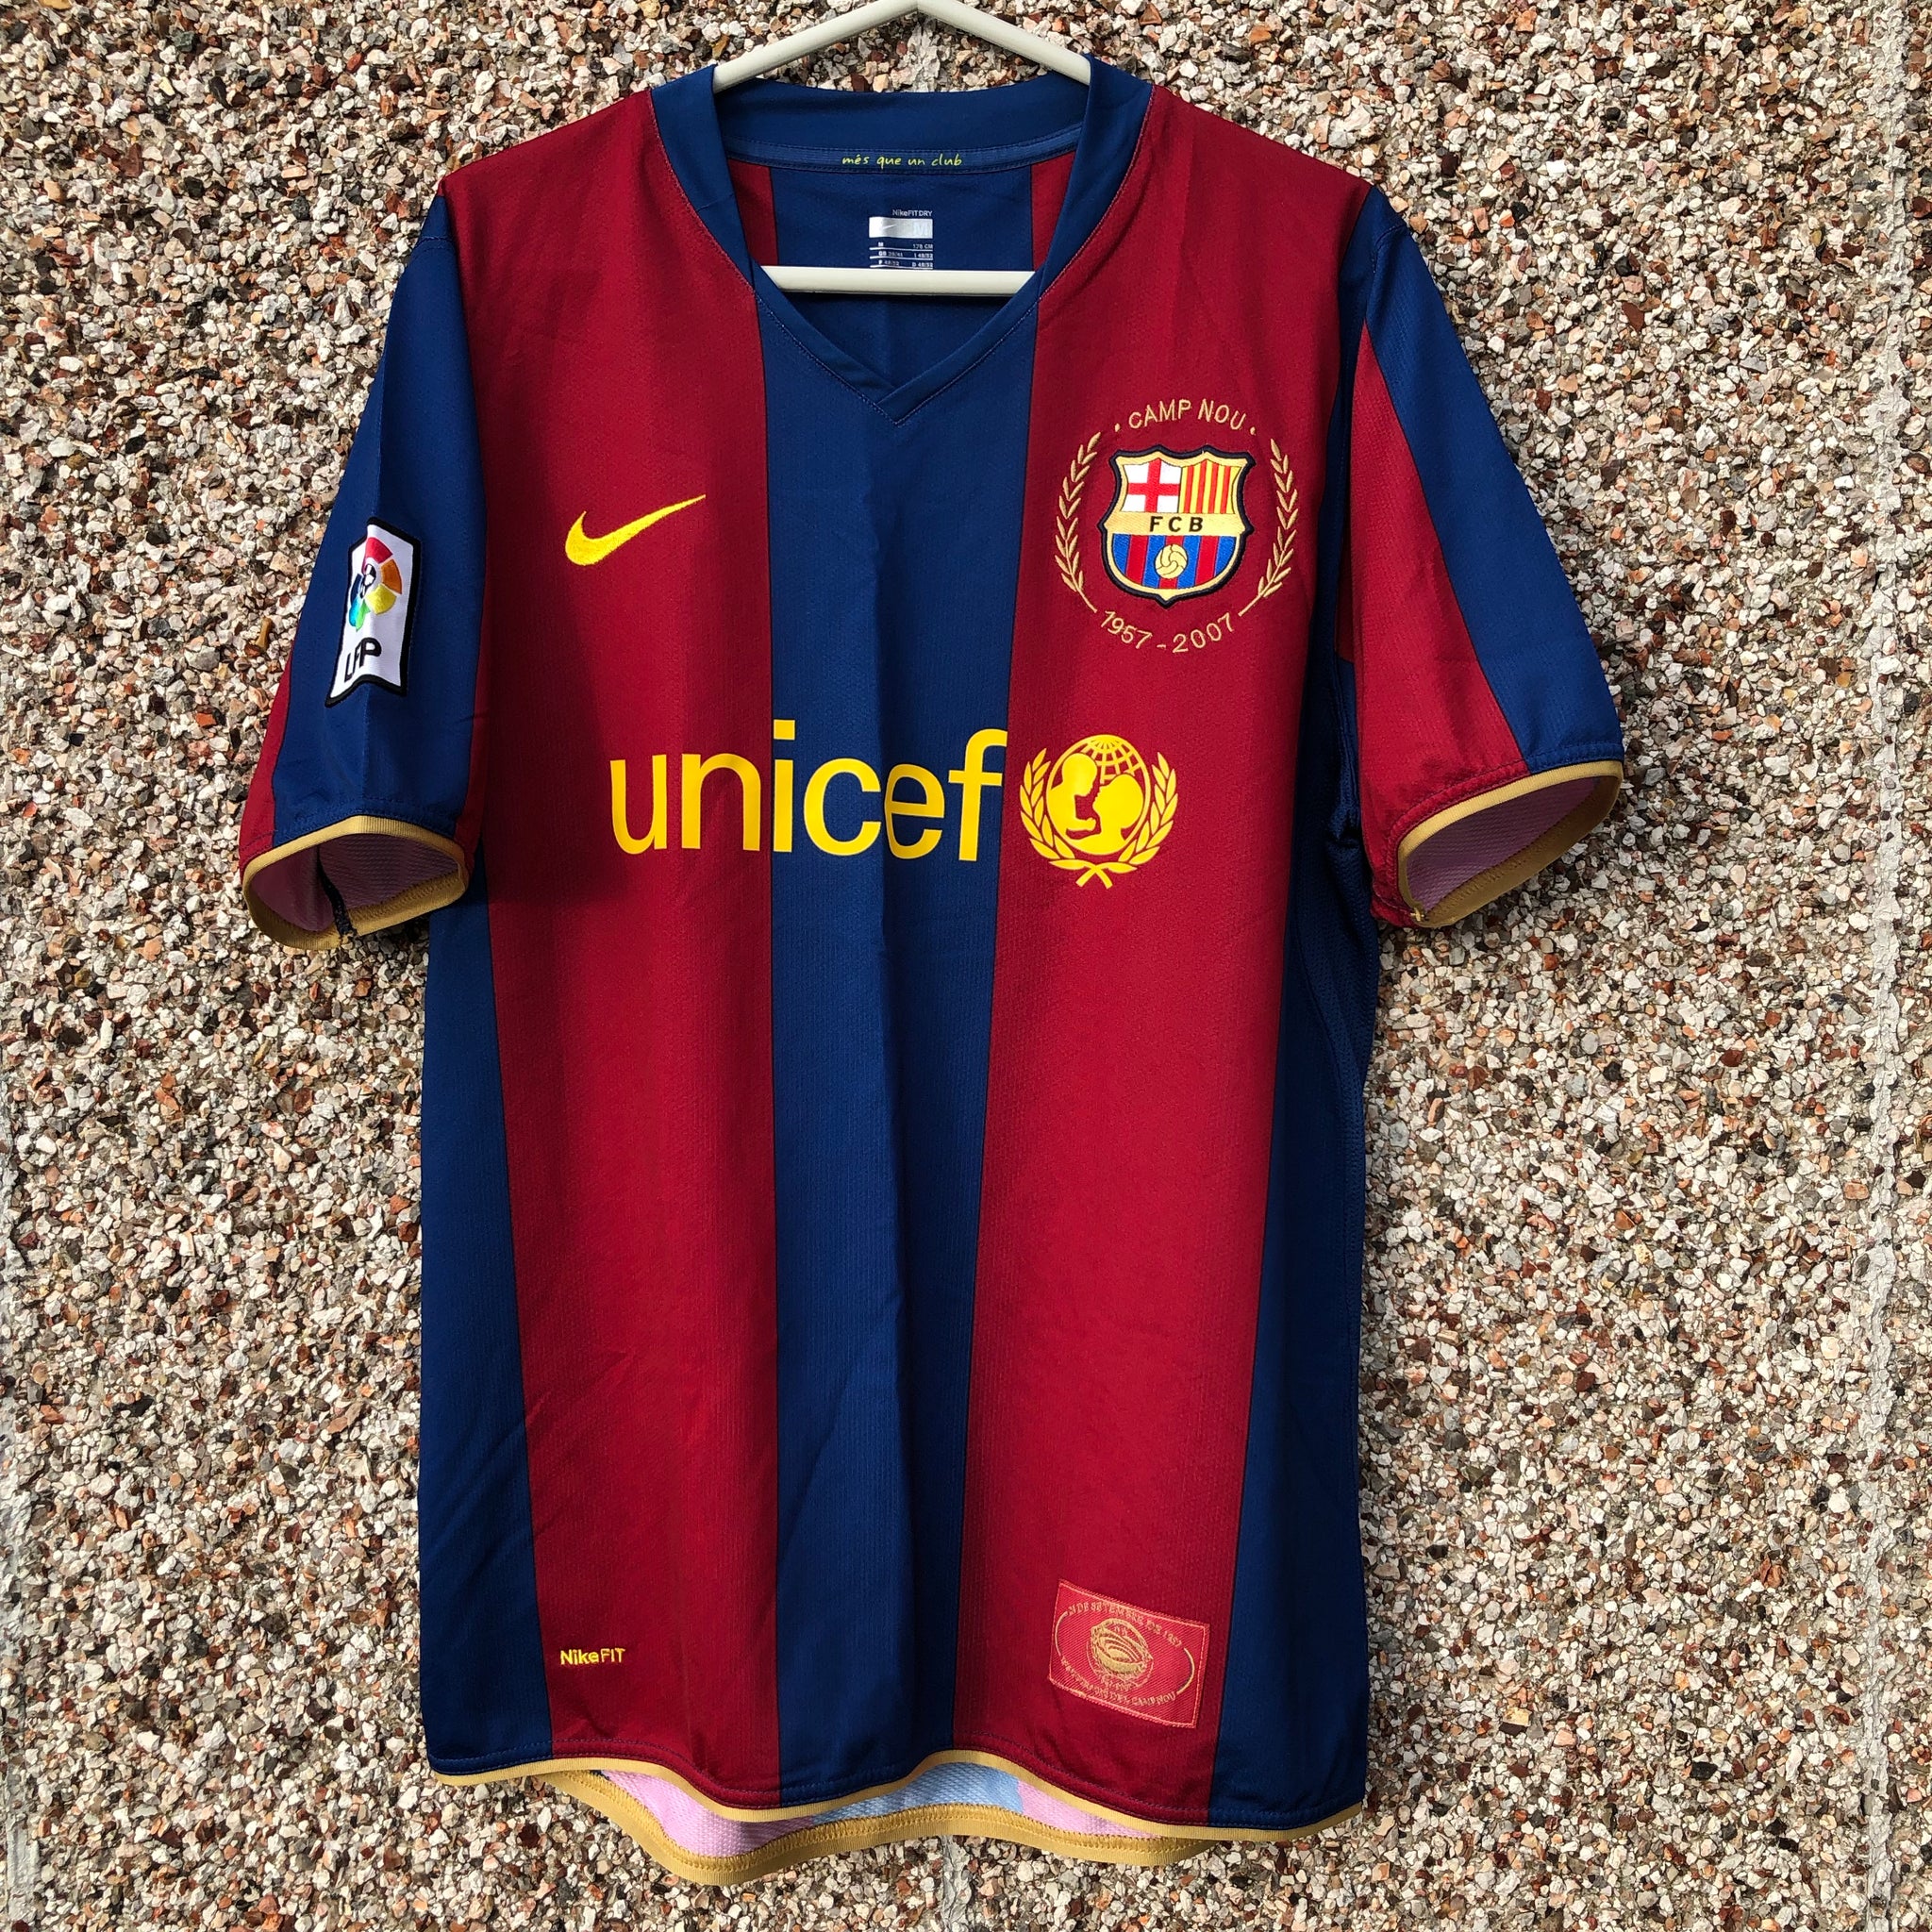 barcelona 2007 jersey